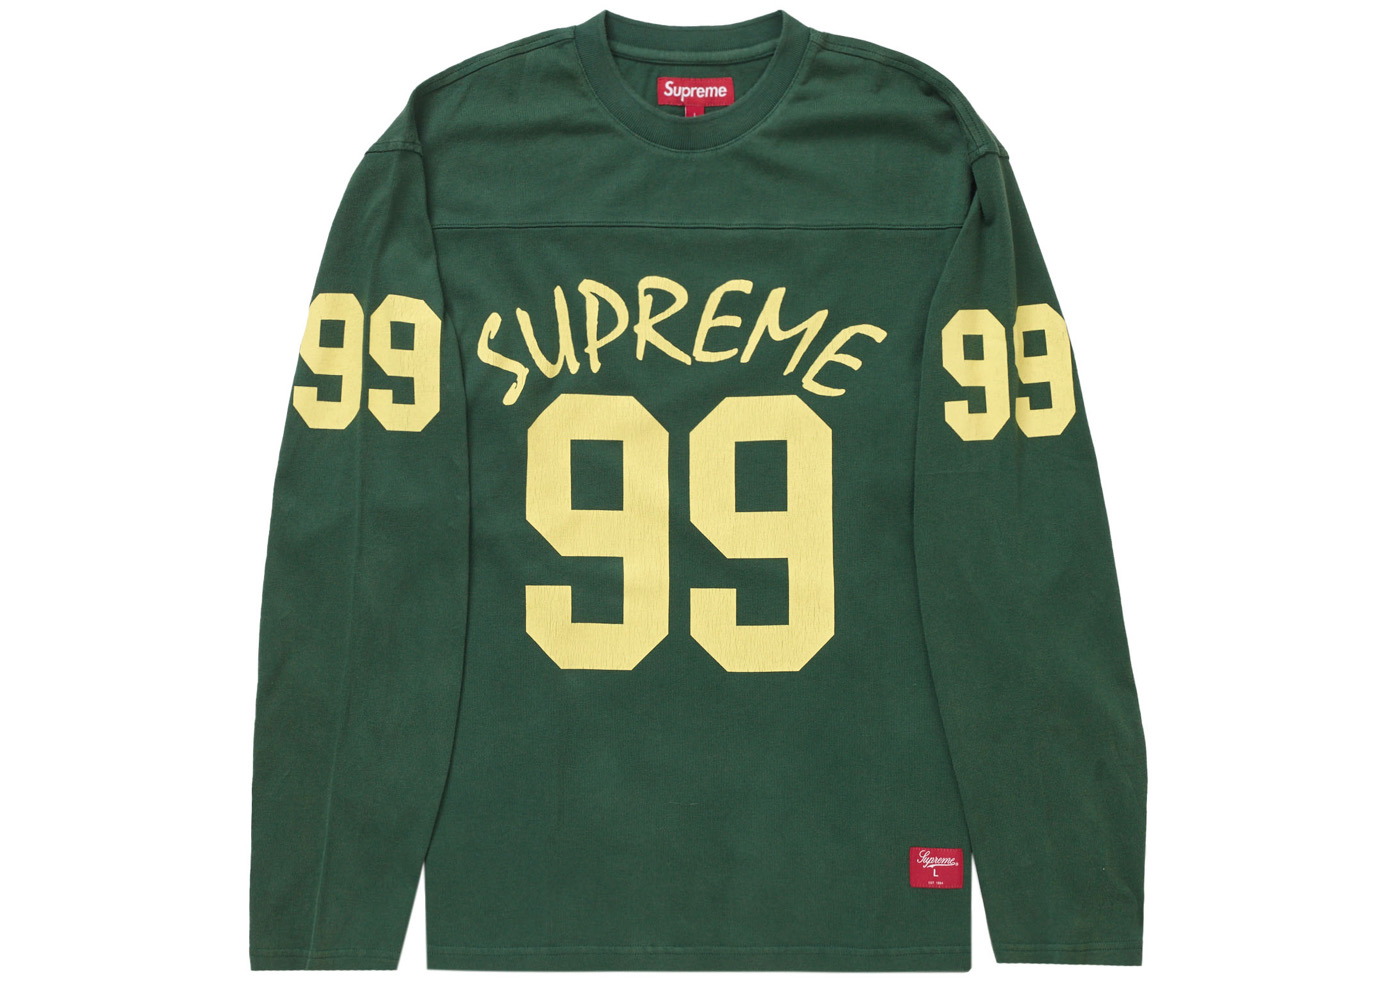 Supreme 99 L/S Football Top Green